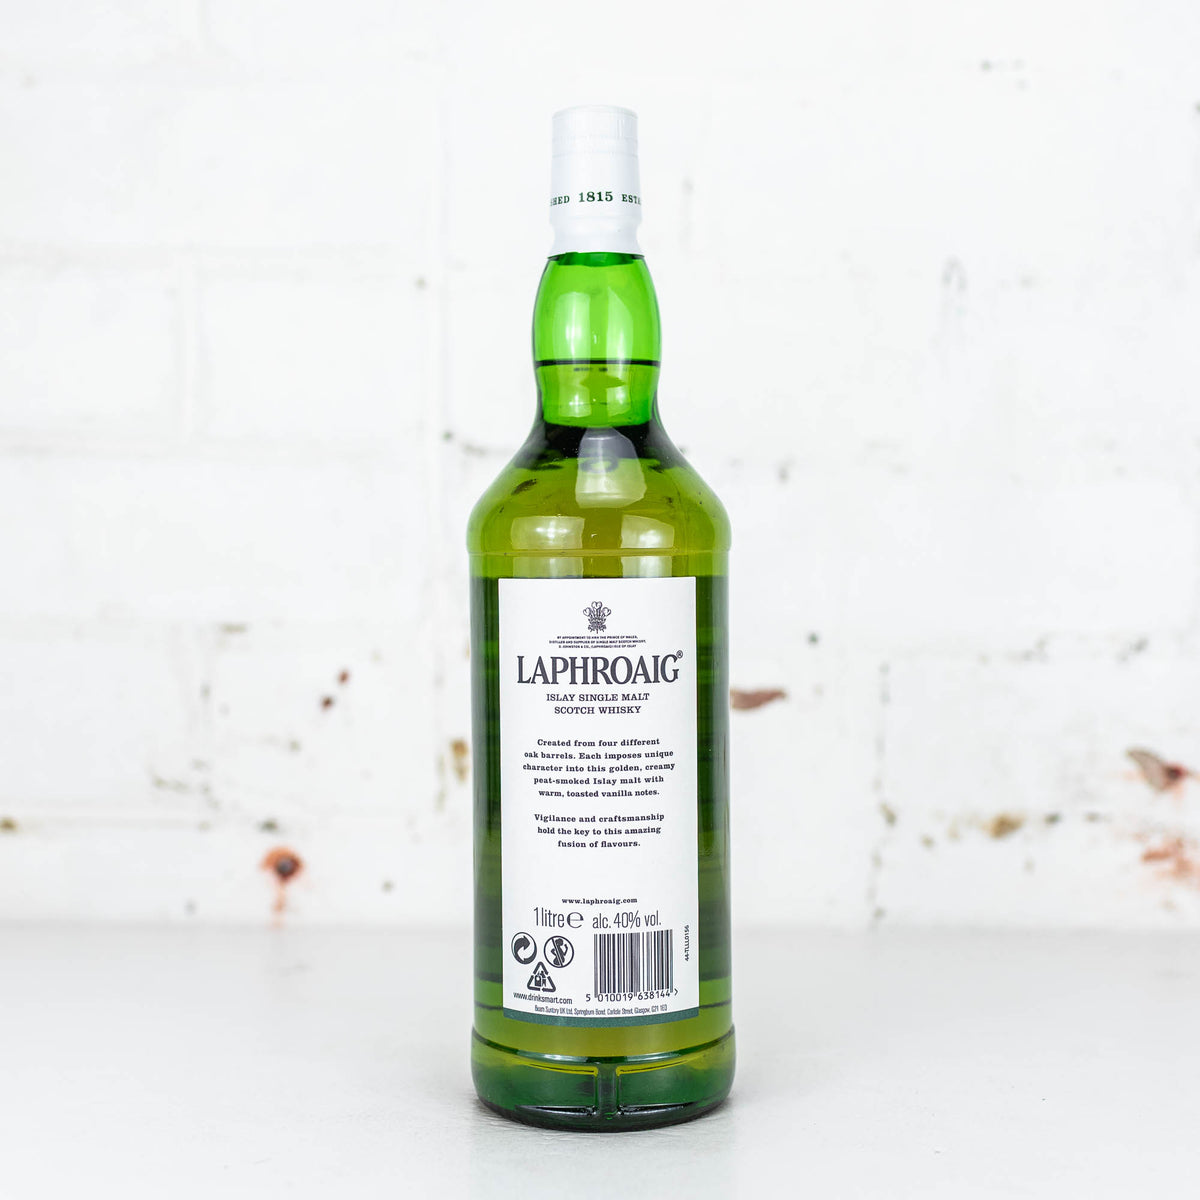 Laphroaig Four Oak Islay Single Malt Scotch Whisky [1000ml]